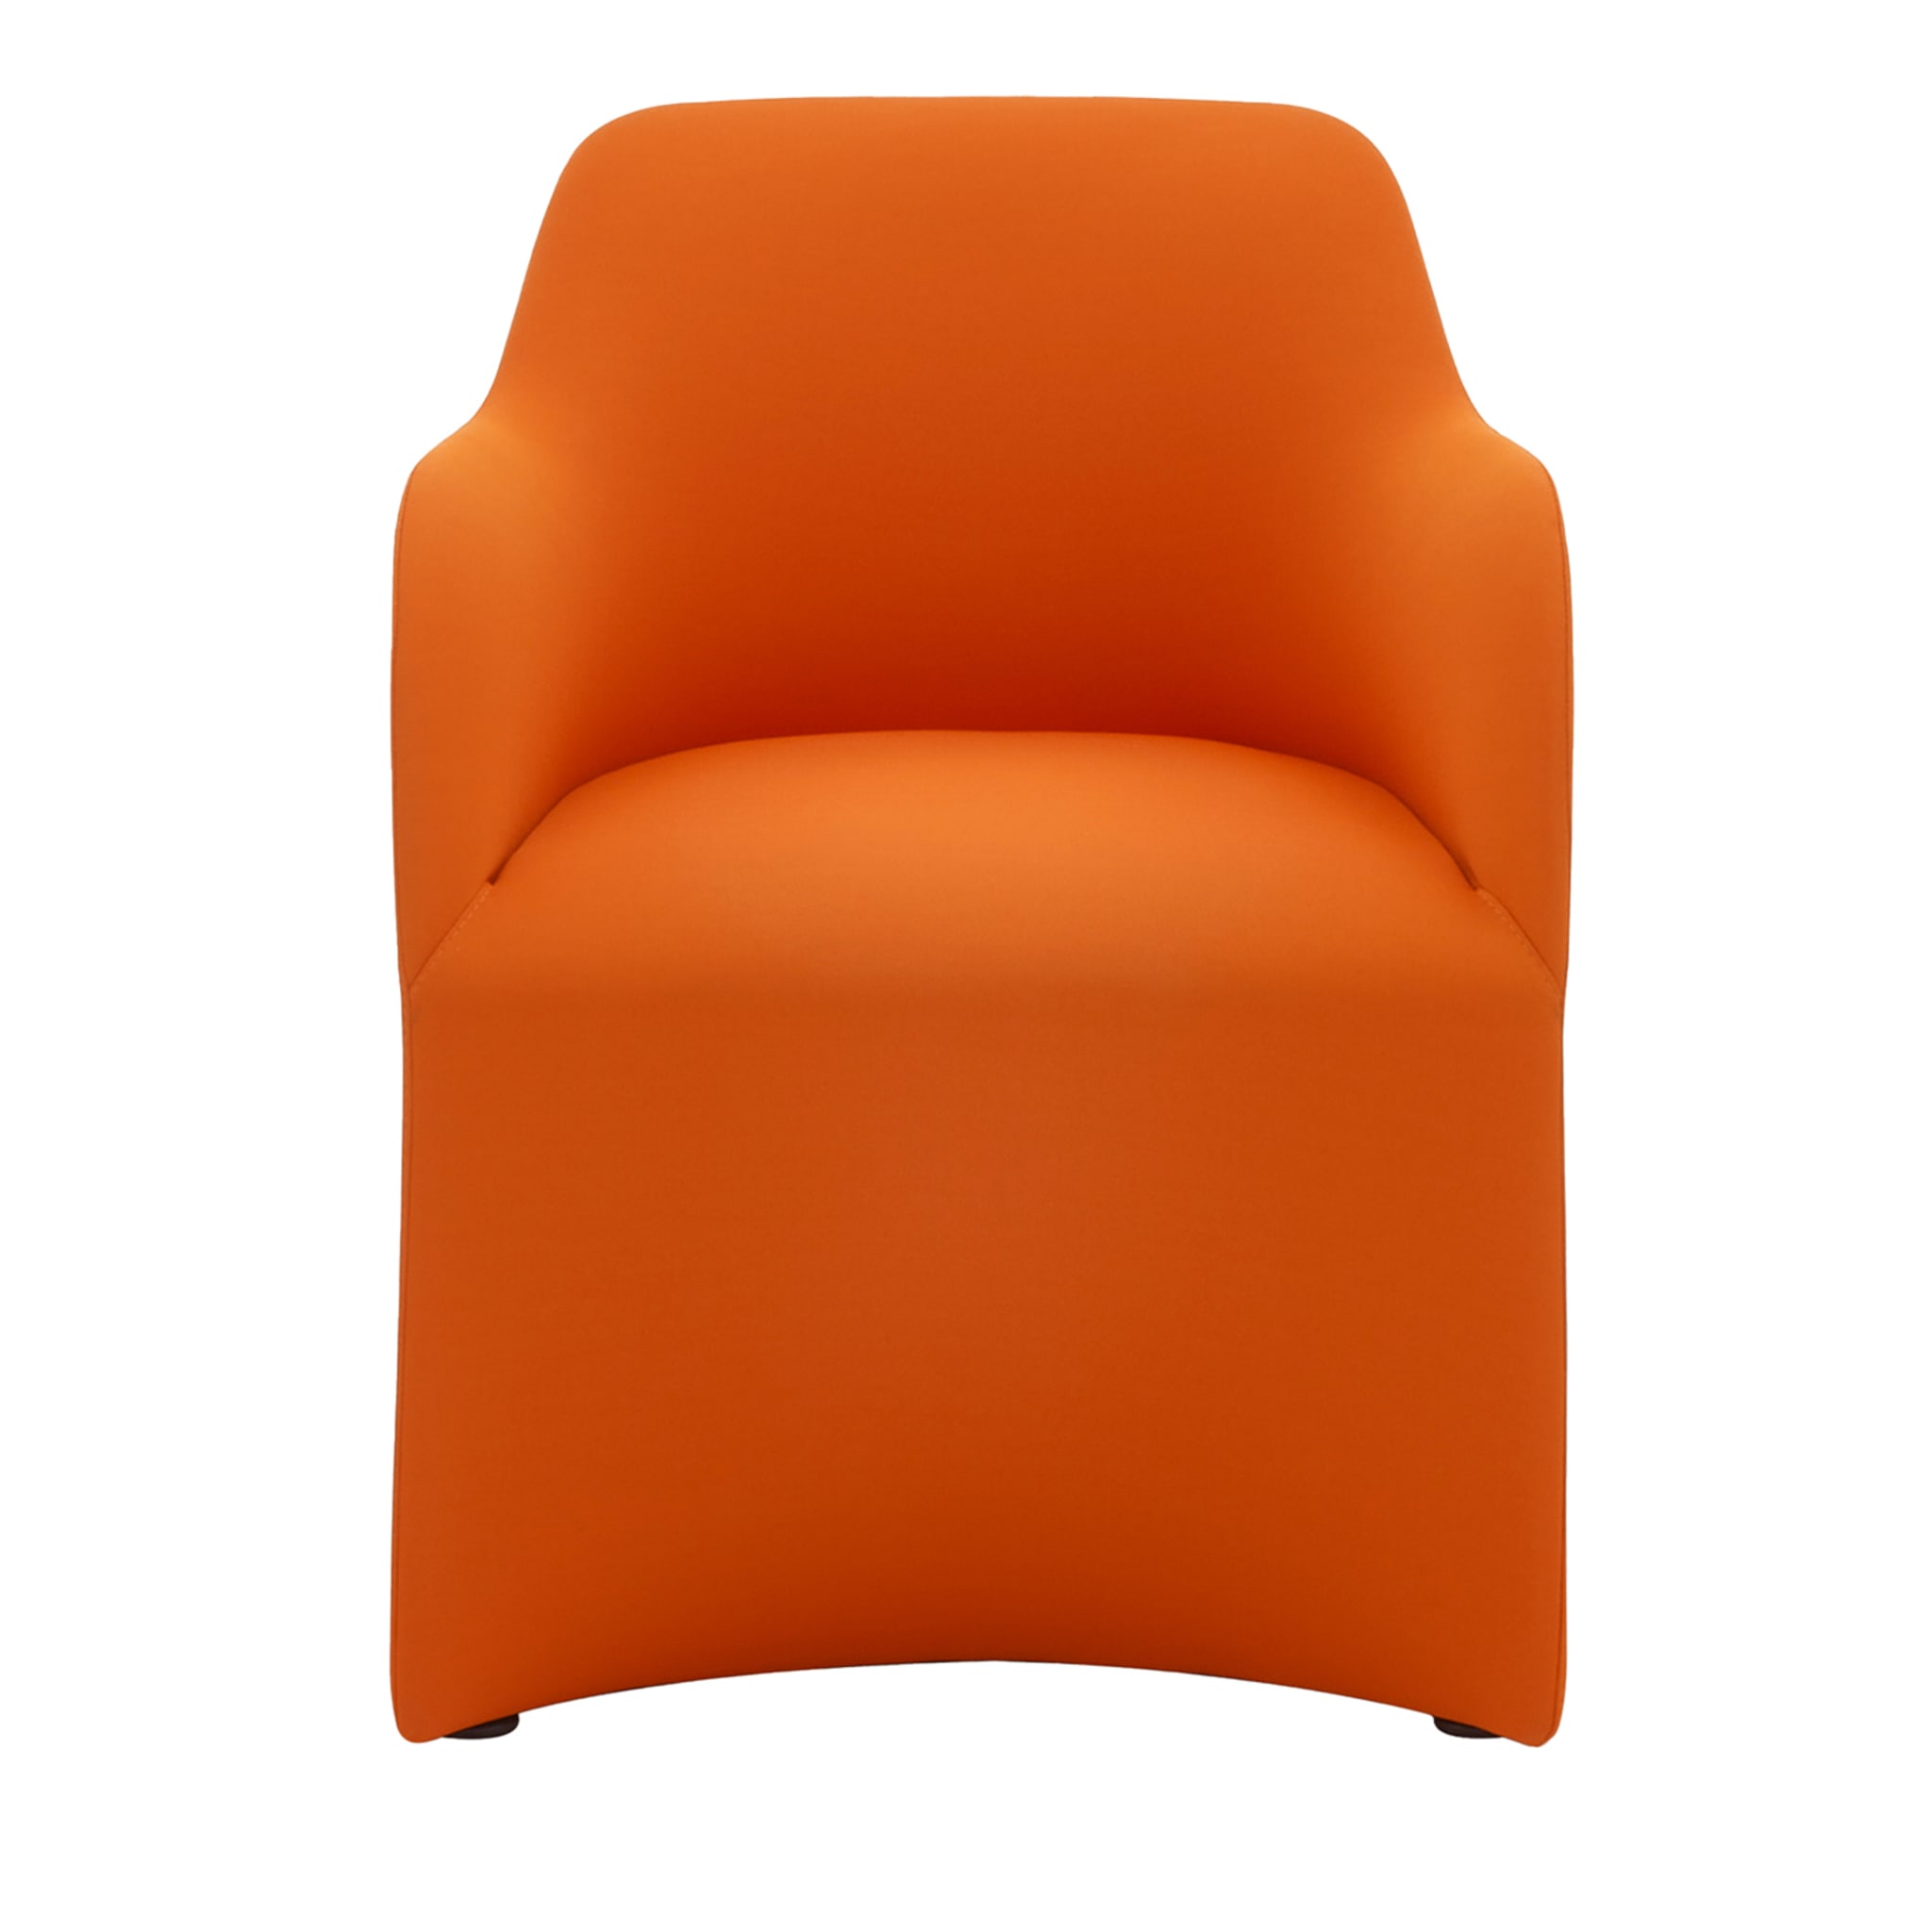 Maggy Big Orange Armchair by Basaglia + Rota Nodari - Main view